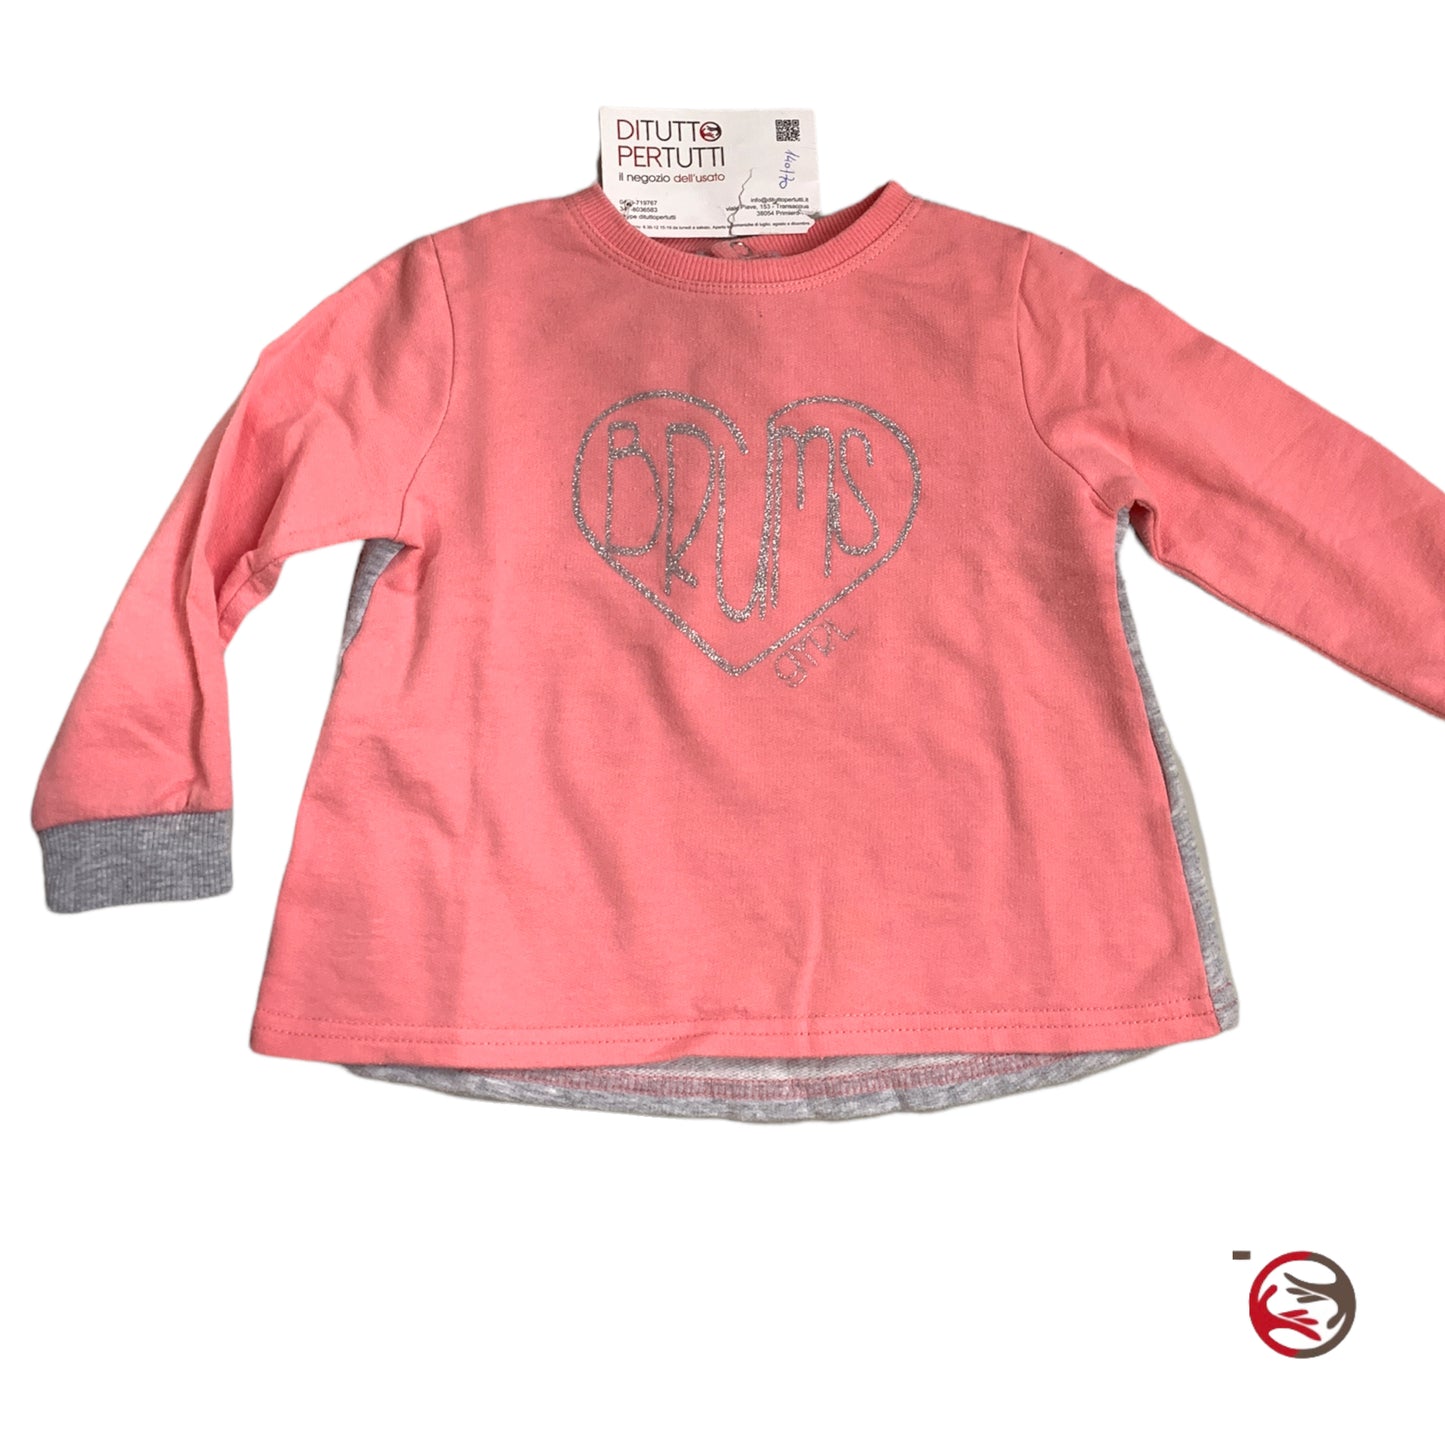 Brums pink sweatshirt for girls 18 months